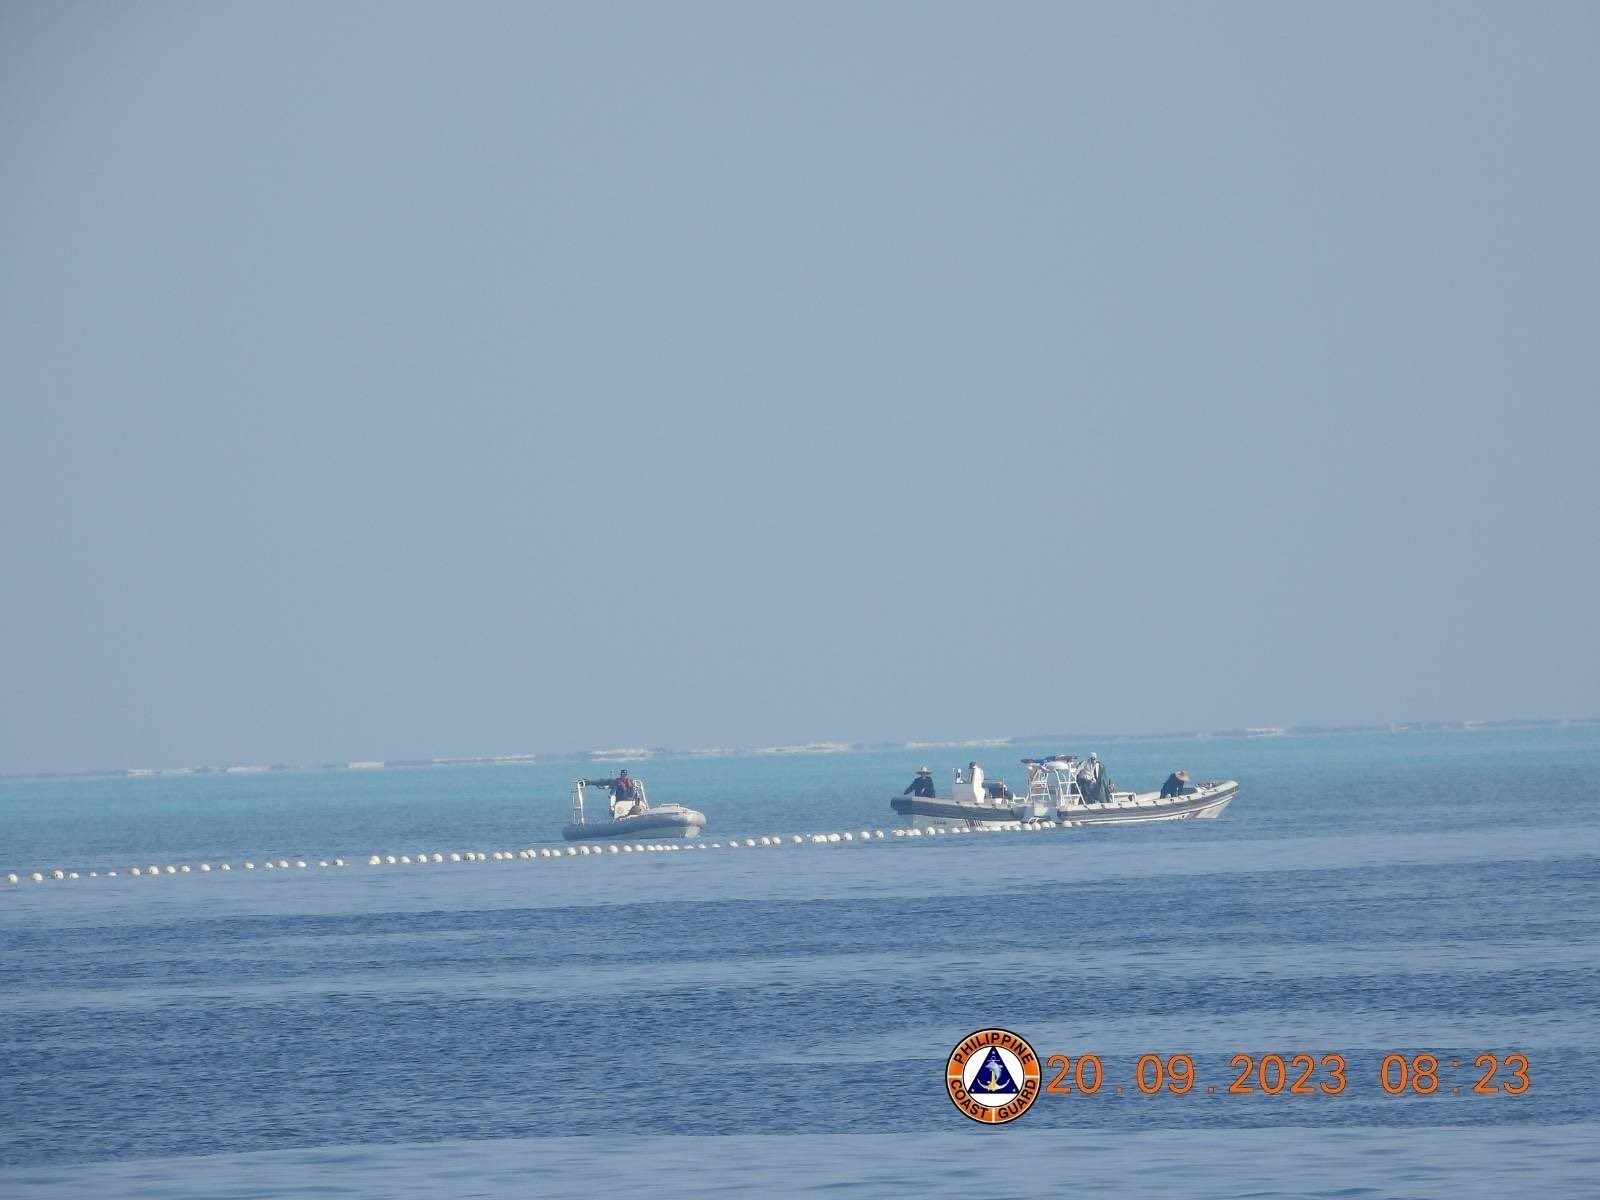 China puts floating barriers in Scarborough Shoal, blocking Filipino fishermen – PCG